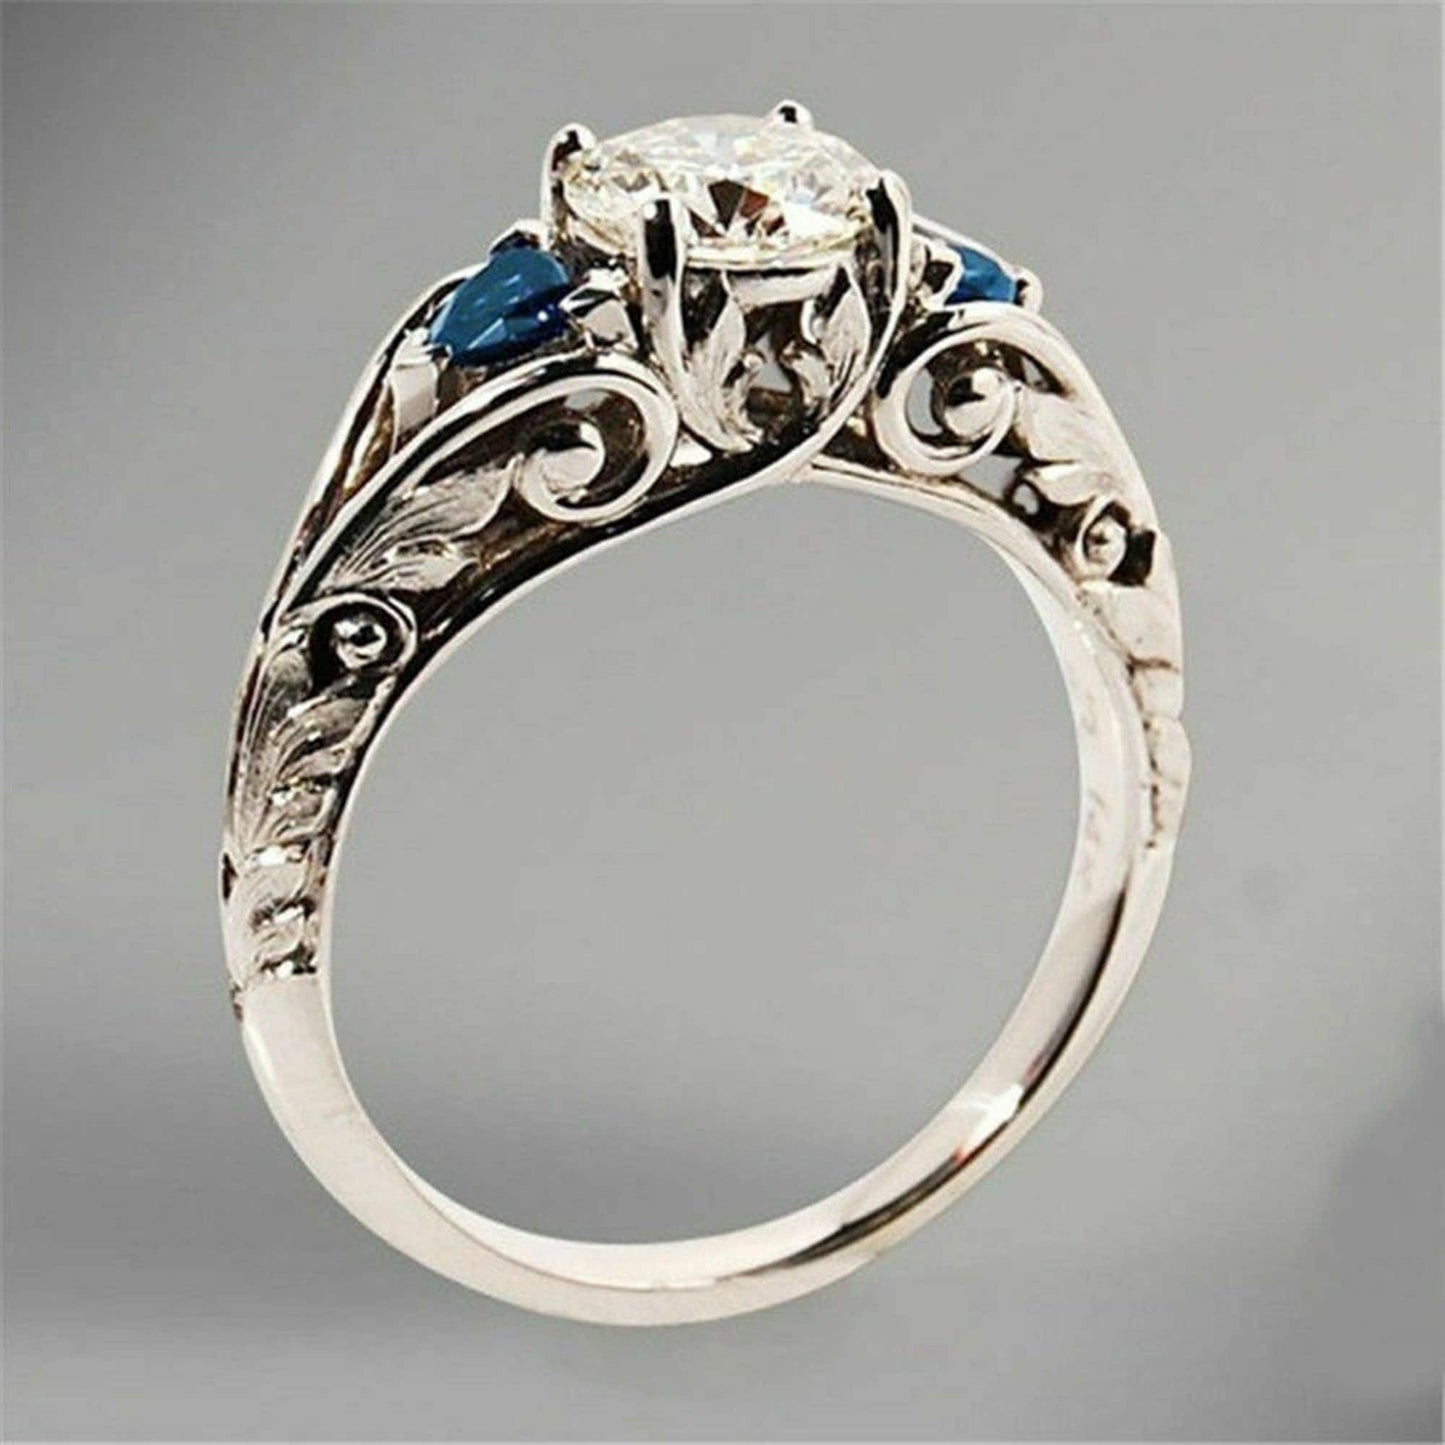 Filigree Art Deco Sapphire Ring/Three Stone Engagement Ring/White Round & Blue Trillion Cut Diamond Woman's Ring/14K Gold Wedding Ring